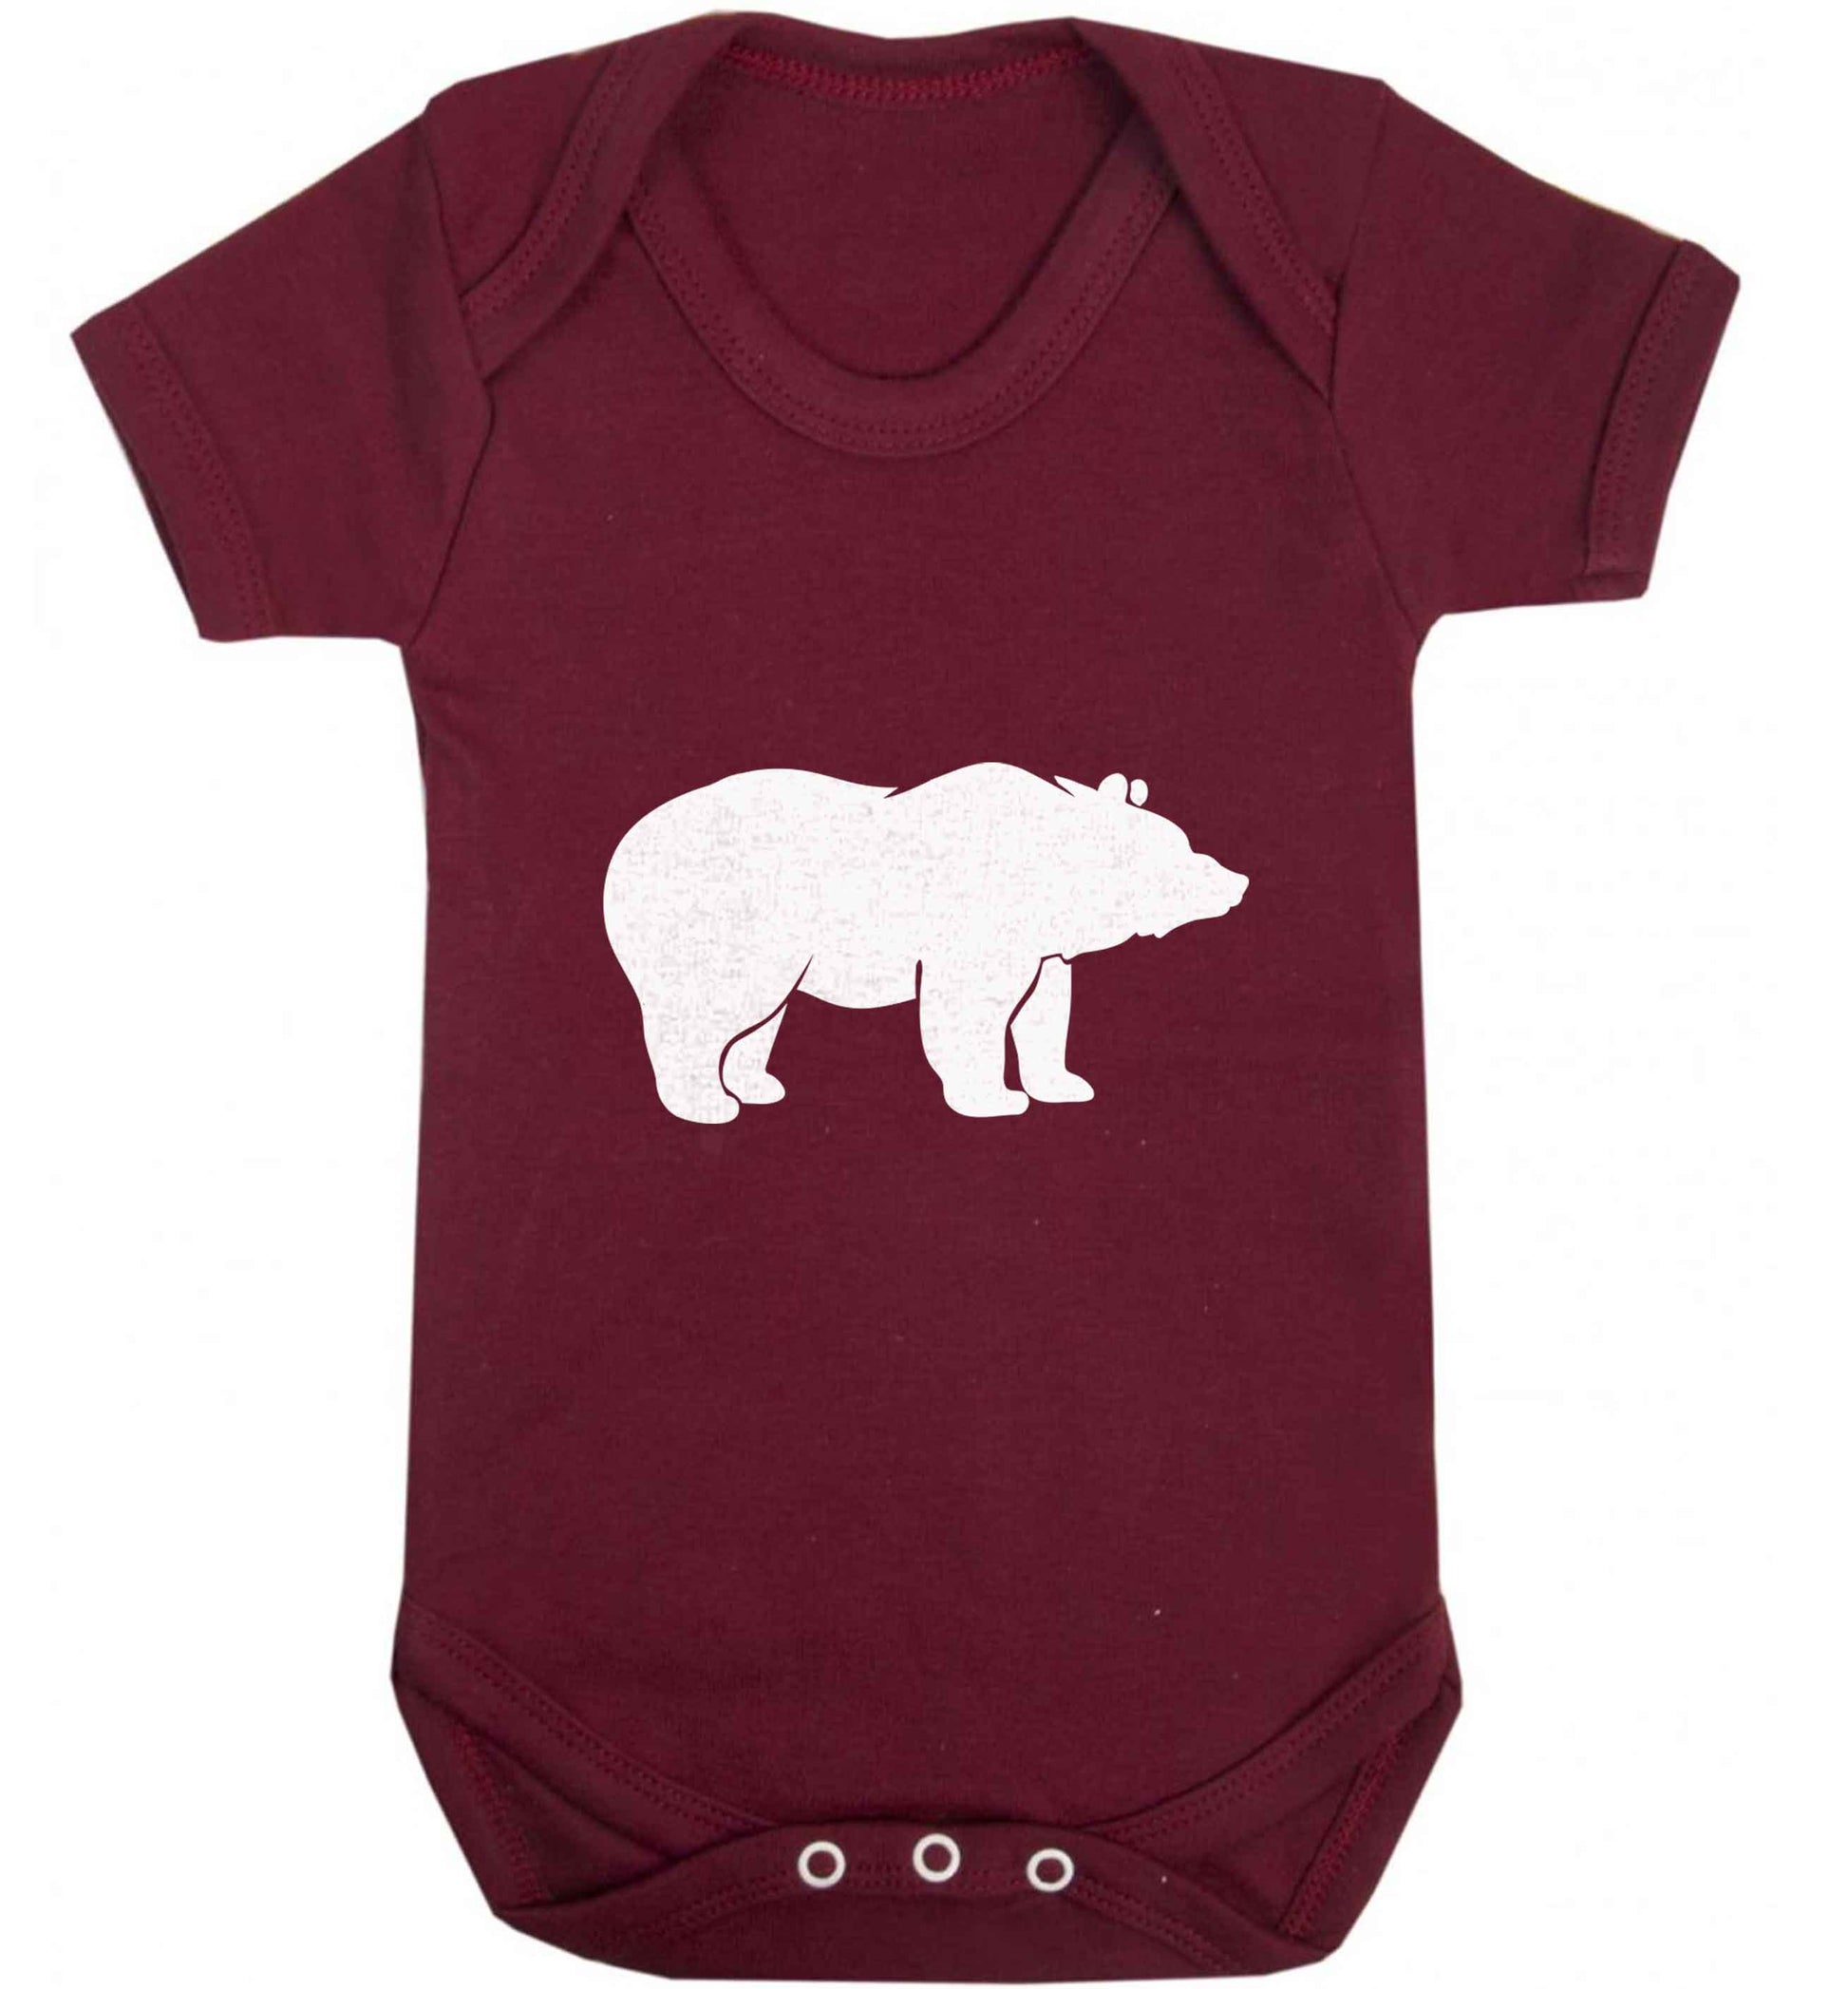 Blue bear baby vest maroon 18-24 months